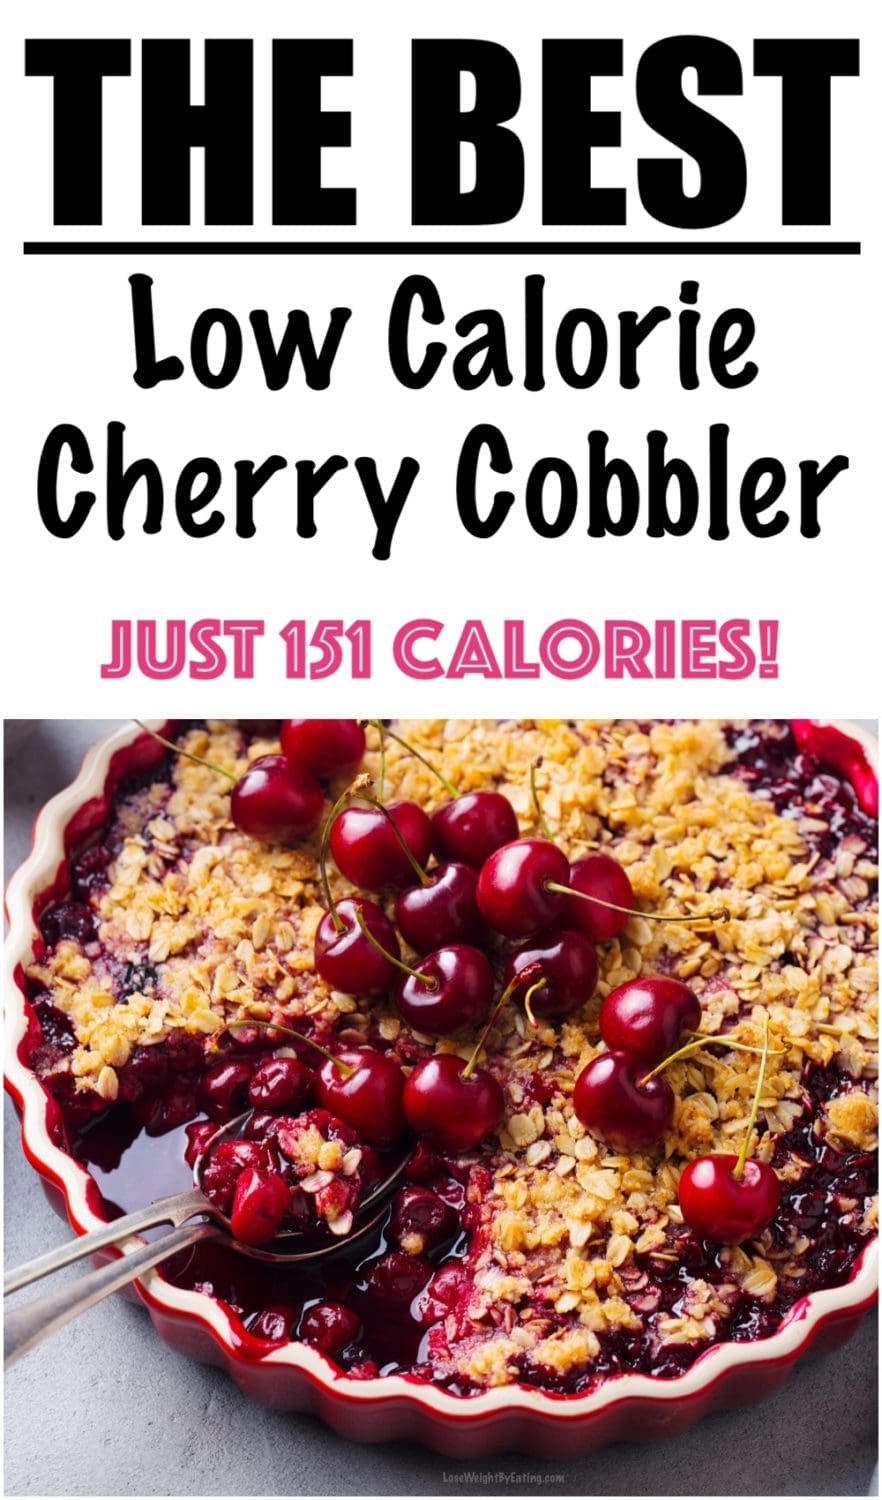 Easy Cherry Cobbler Recipe